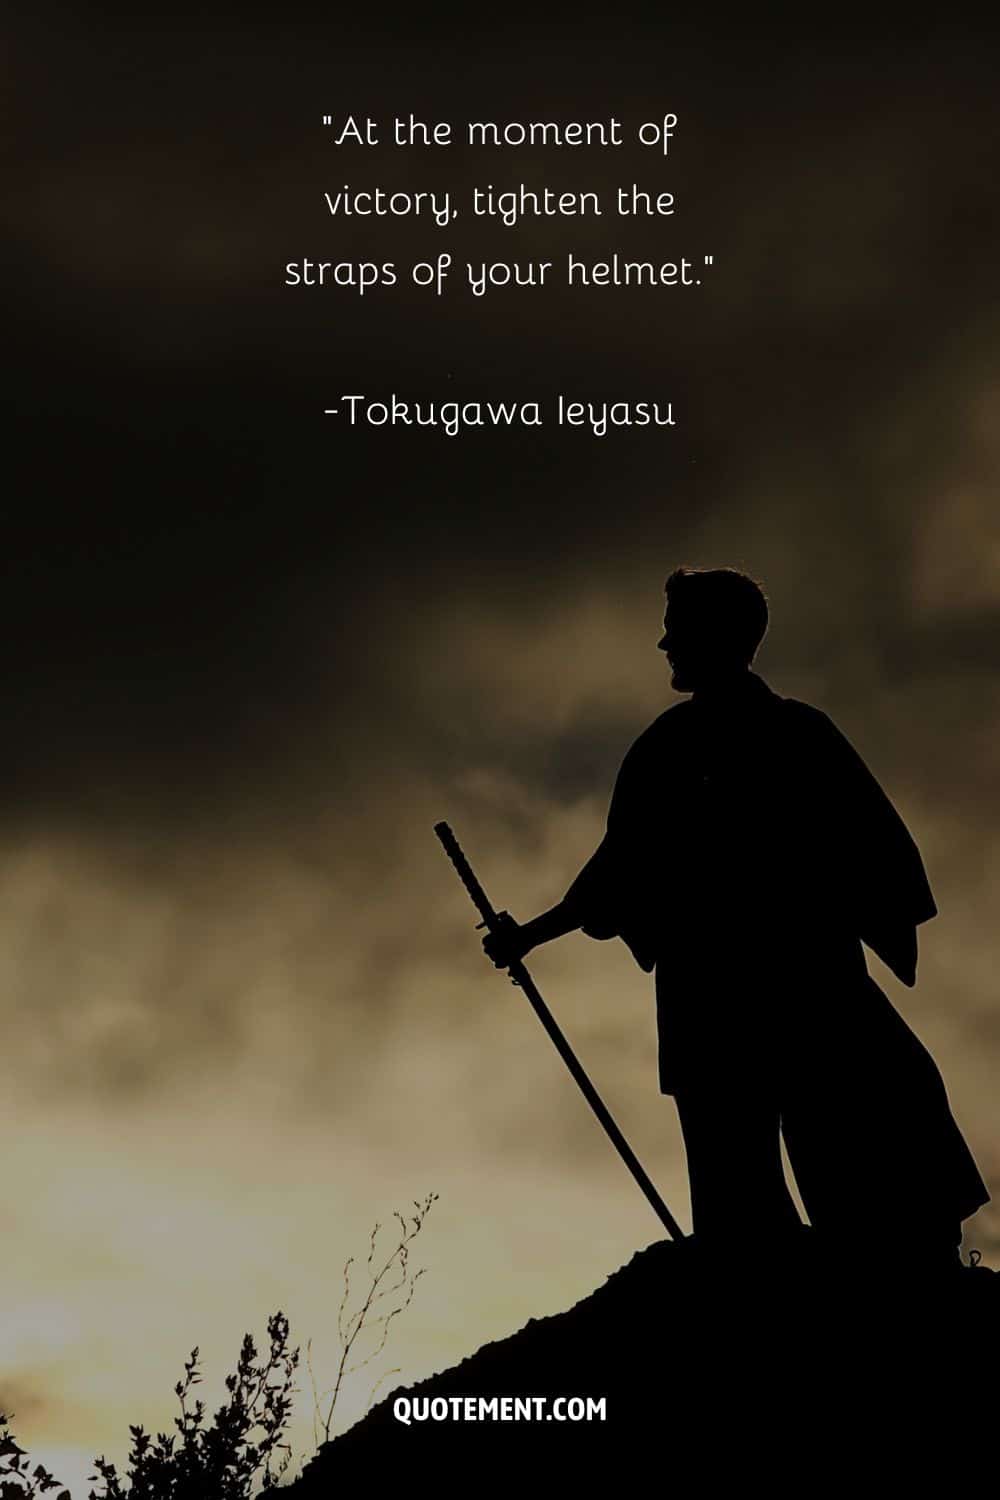 The shadow of a male samurai with his katana drawn representing samurai life